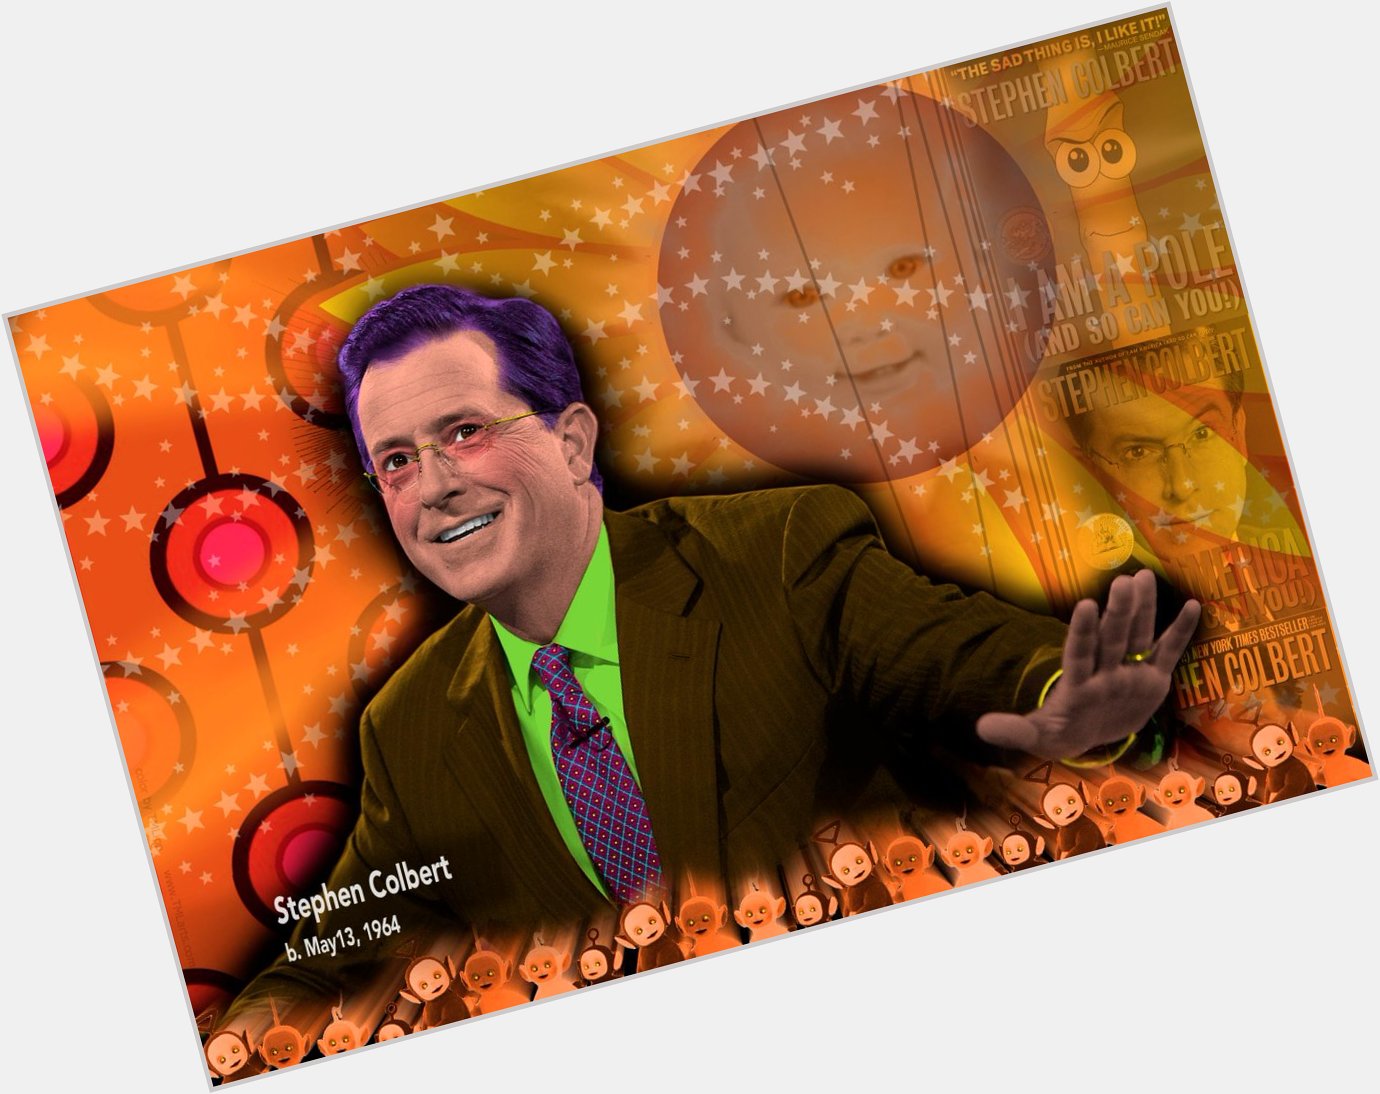 Happy Birthday Stephen Colbert!     